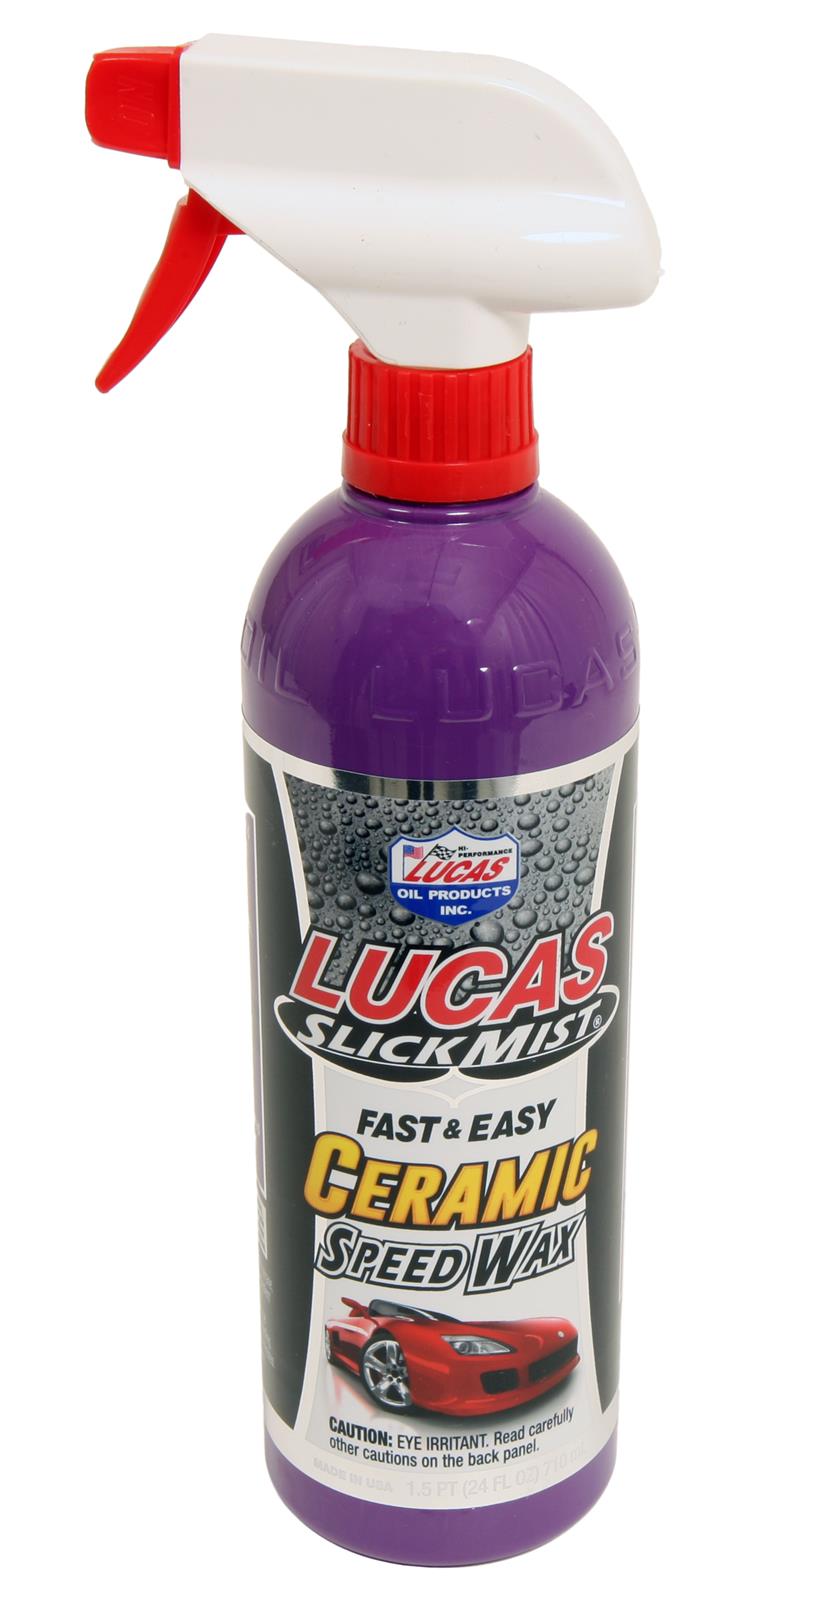 Lucas Oil 11294 Slick Mist Ceramic Speed Wax